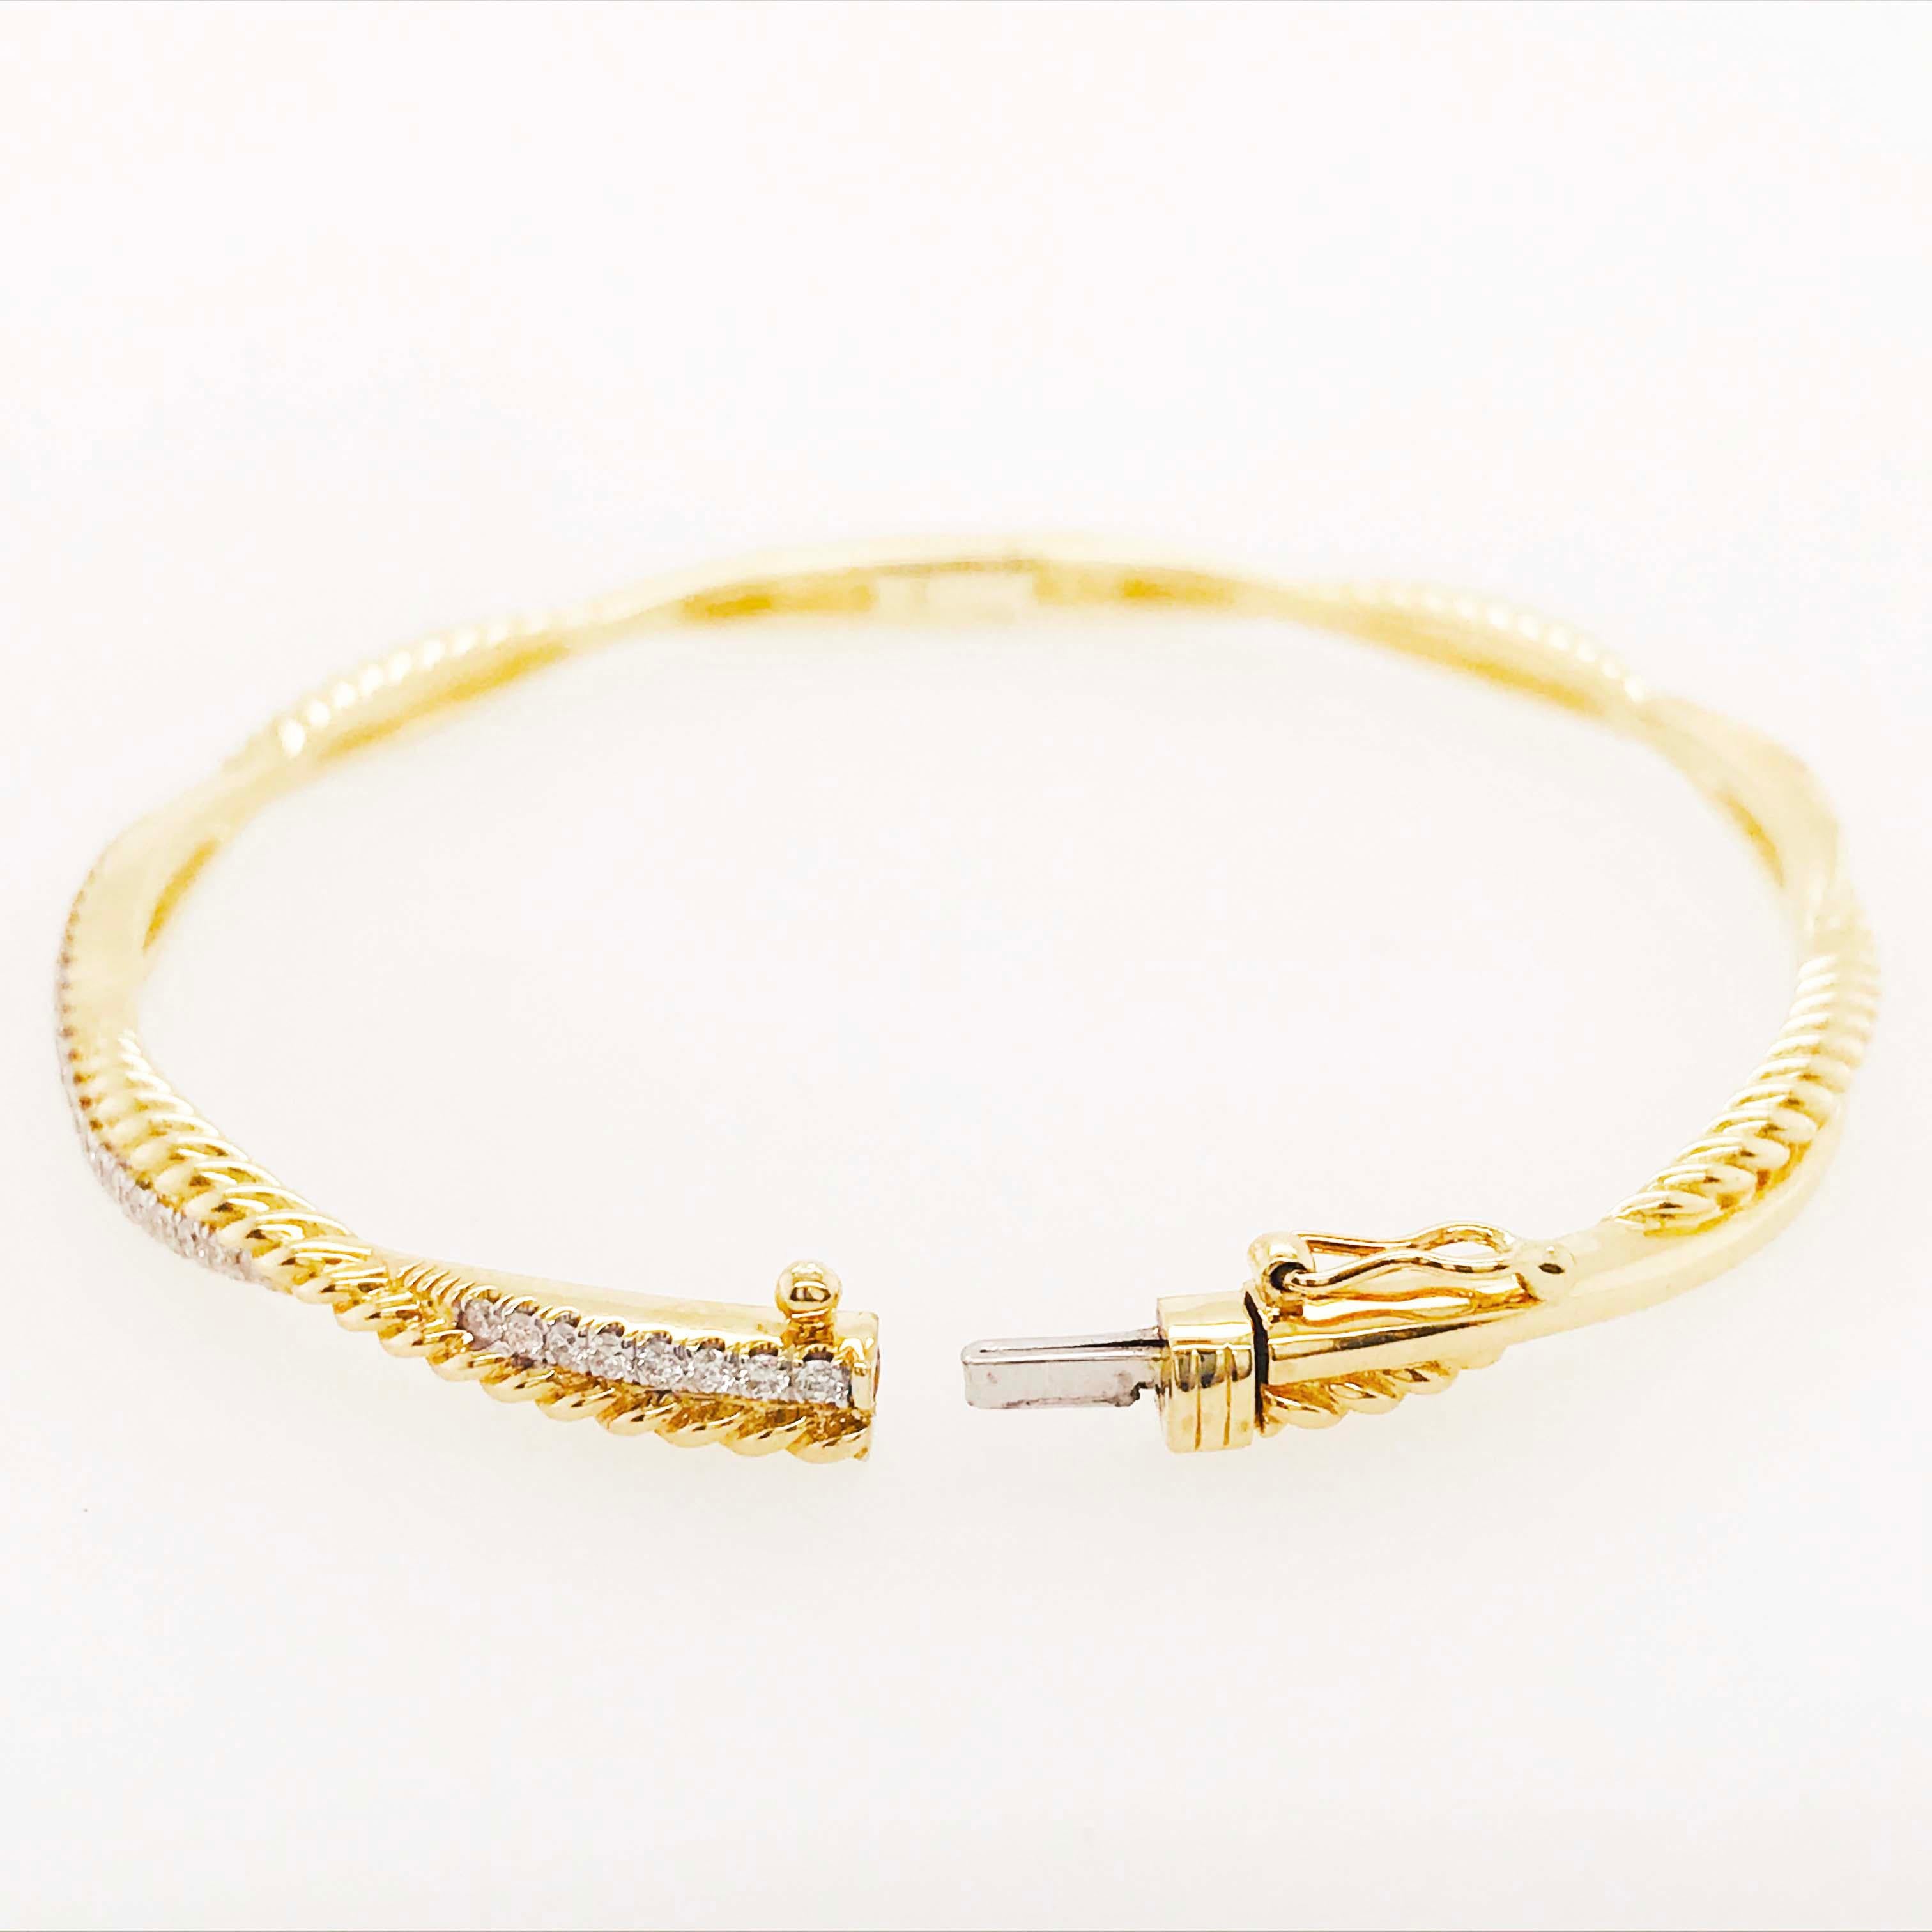 Women's Bangle Tennis Bracelet a Twist of Diamonds and Rope Design in 14 Karat Gold For Sale